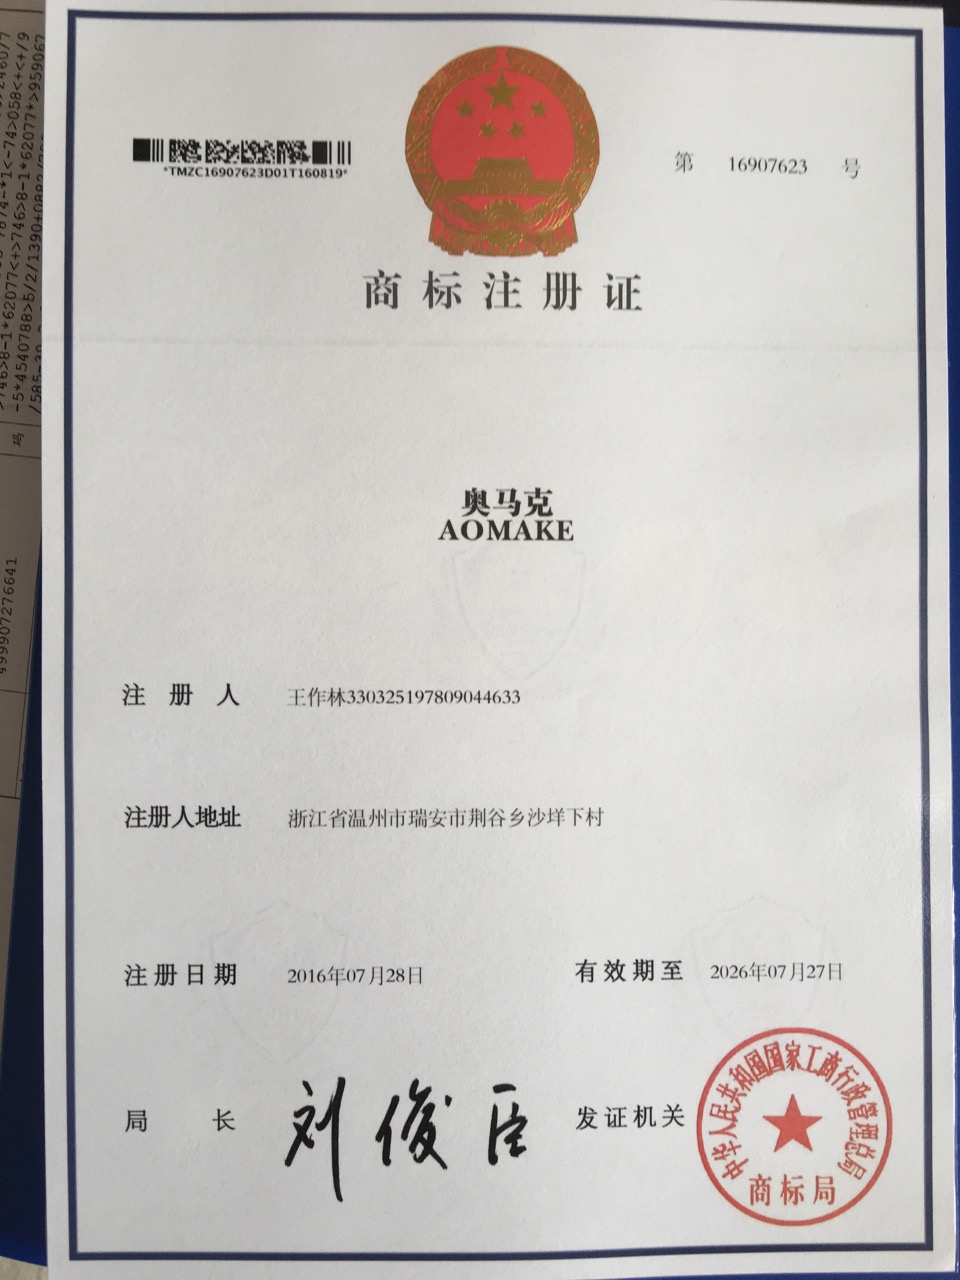 Trade mark license